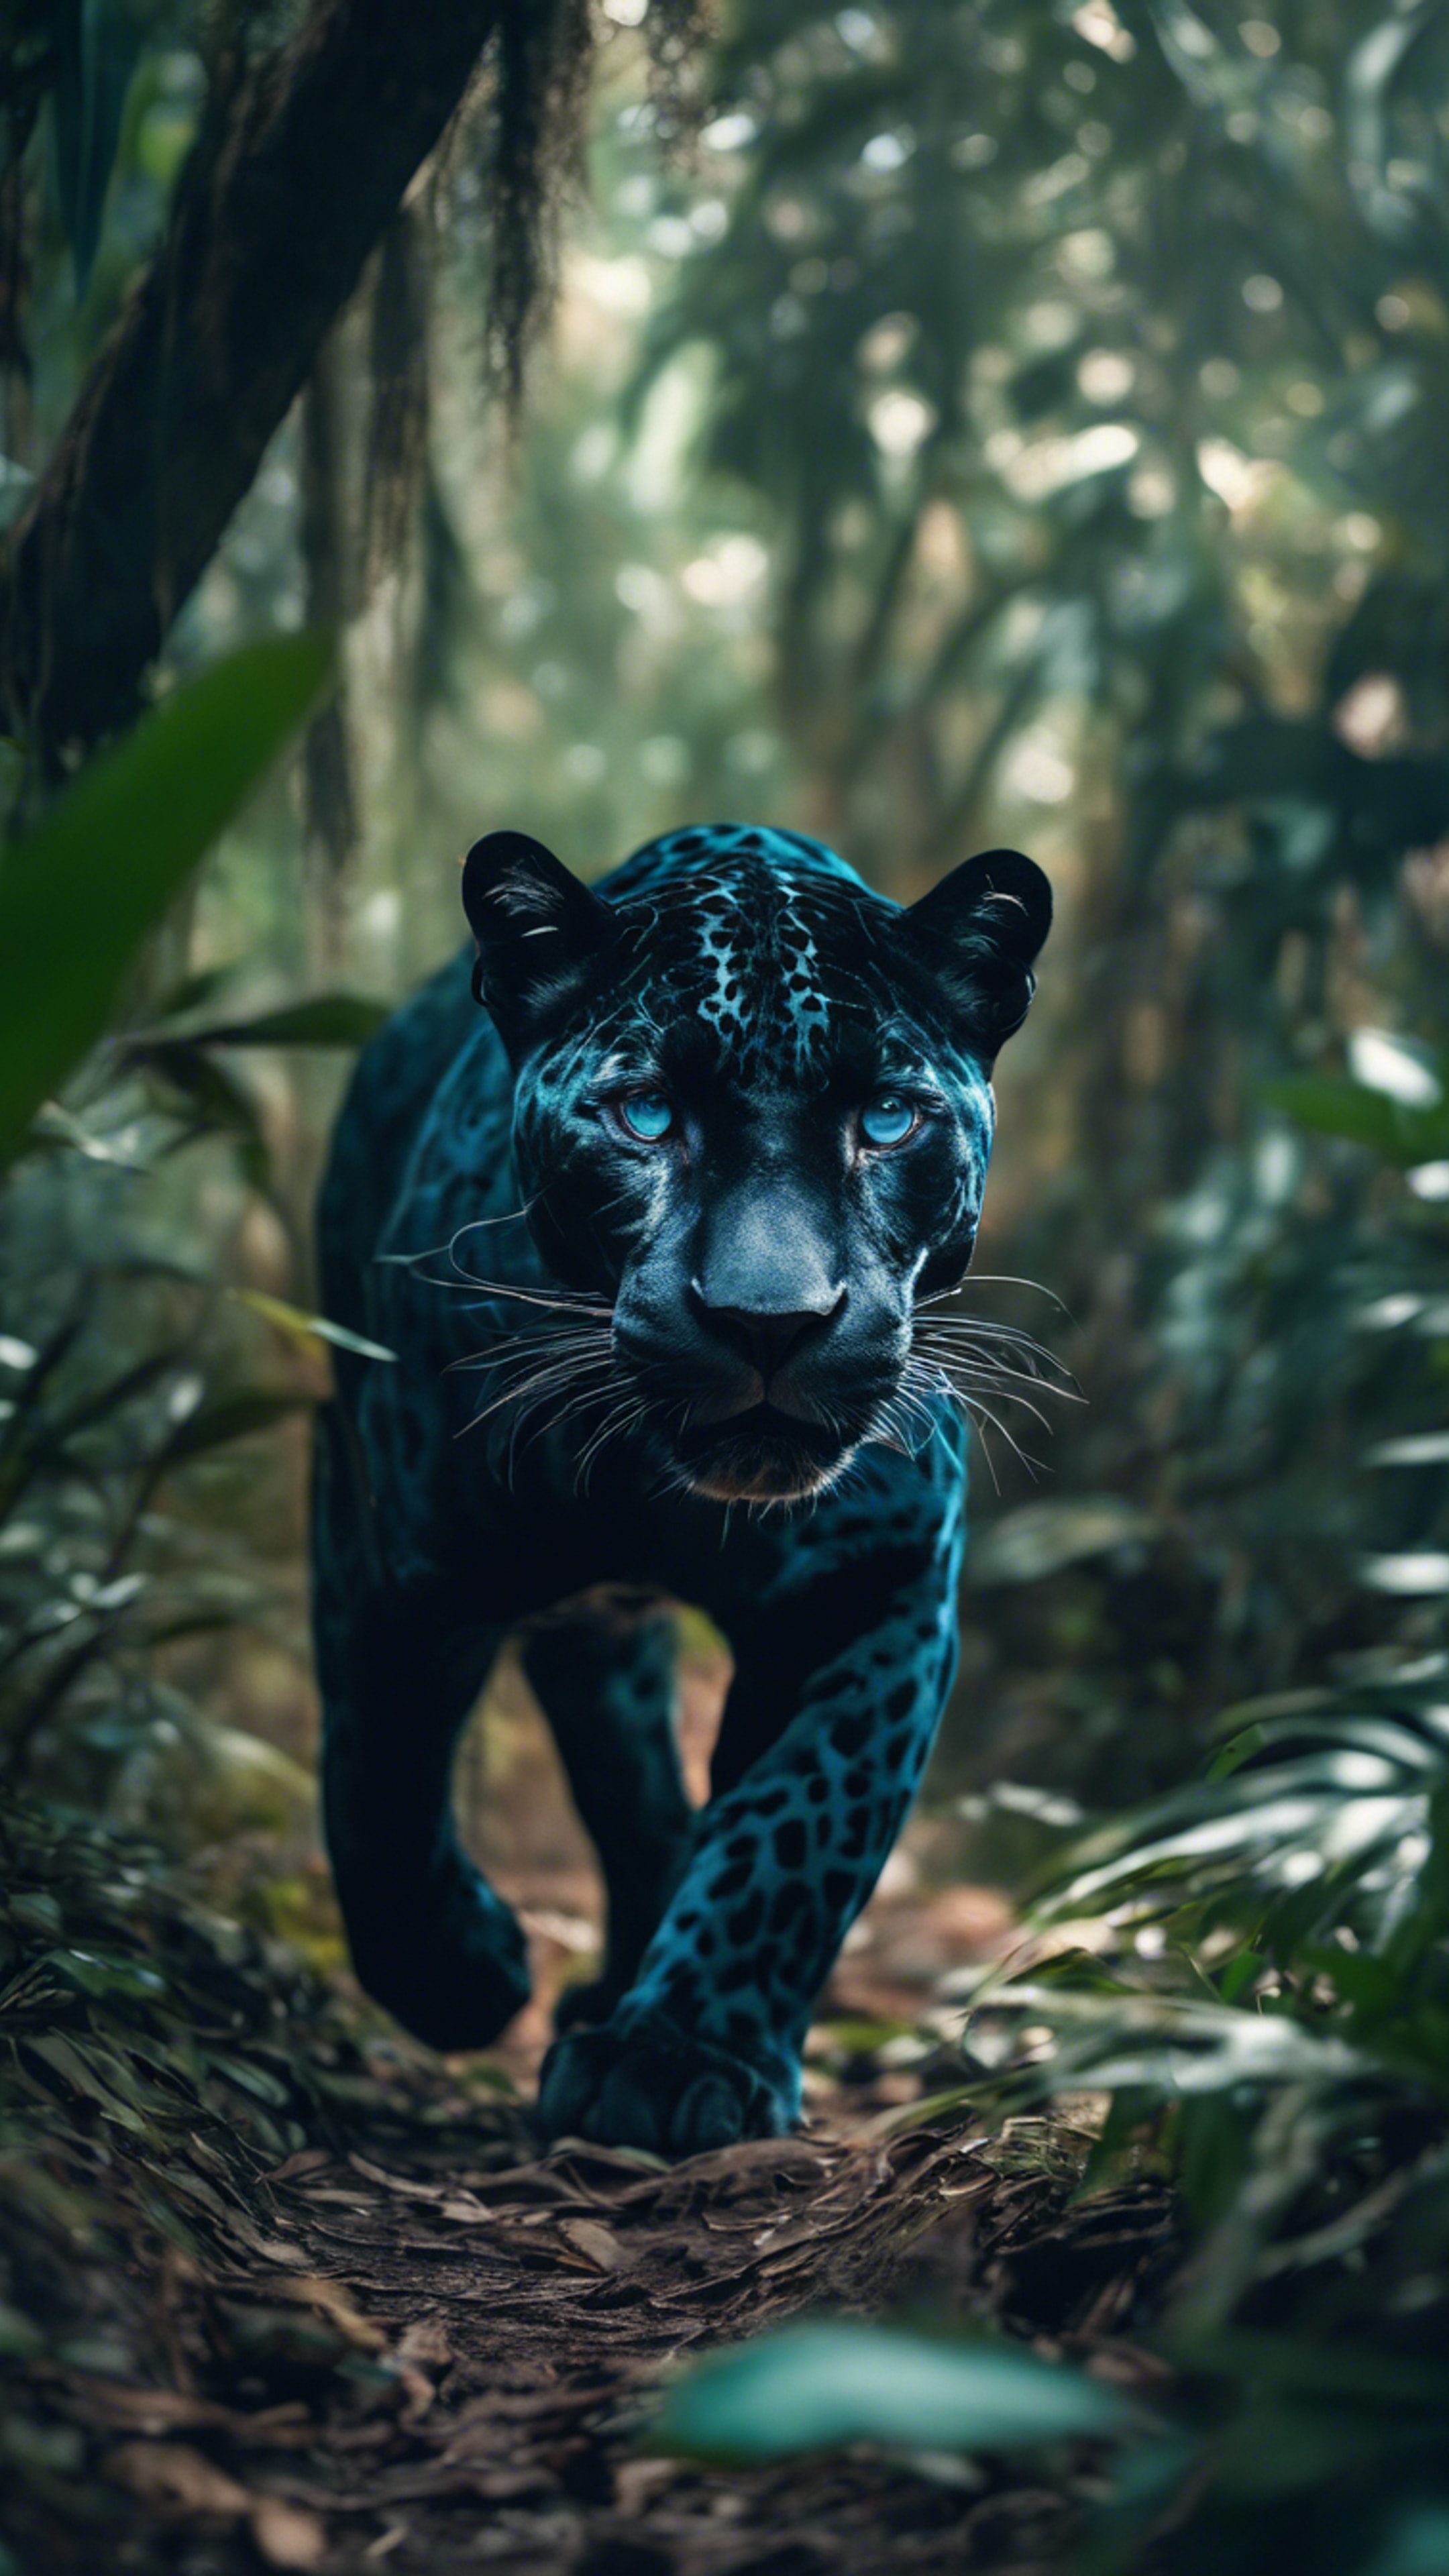 A black jaguar, eyes glowing with cool neon blue hues, prowling through a dark jungle. Tapet[06d4596780d7432e9648]